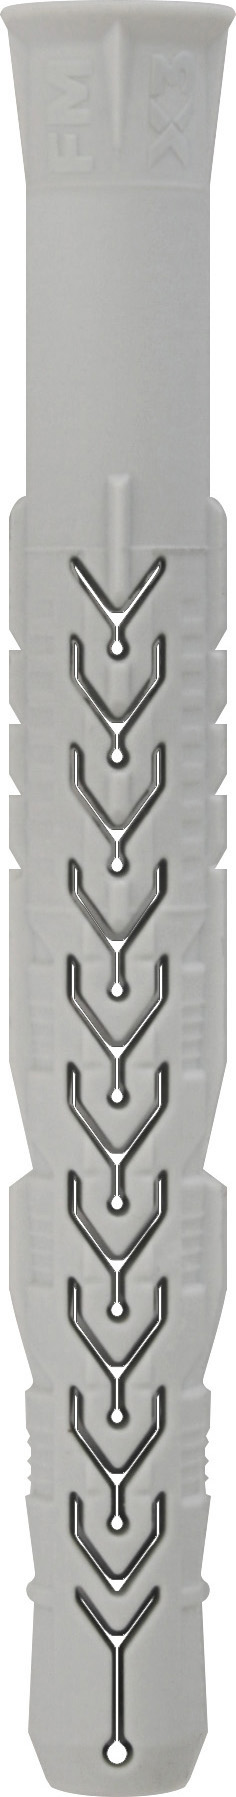 X3 Tassello prolungato c/bordo svasato